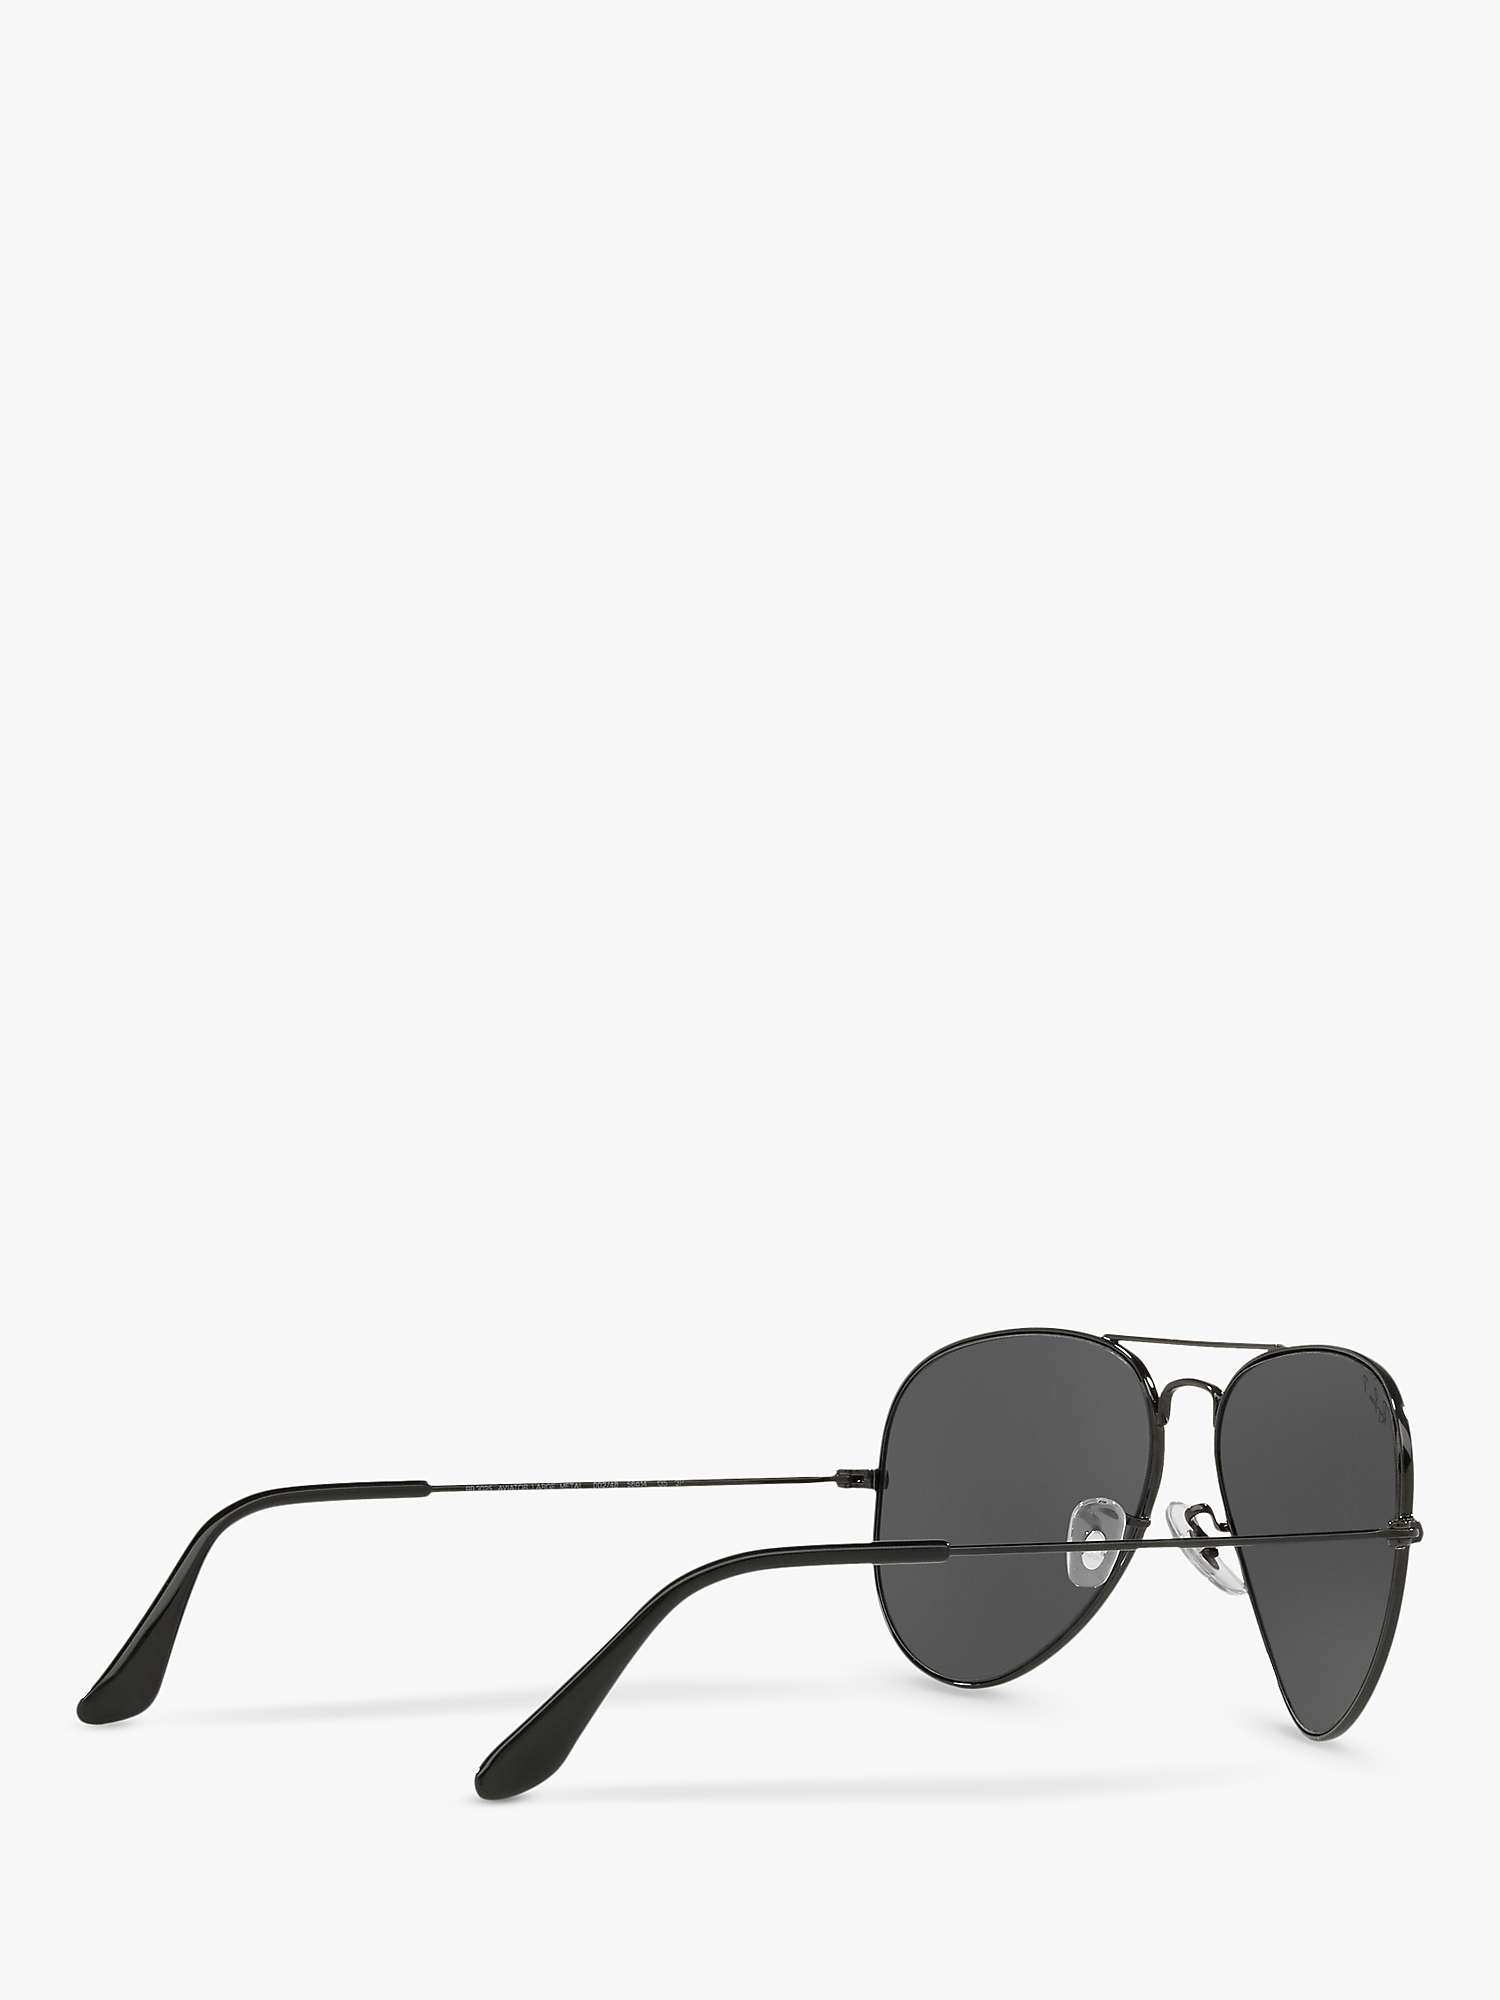 Buy Ray-Ban RB3025 Unisex Polarised Aviator Sunglasses, Black/Grey Online at johnlewis.com